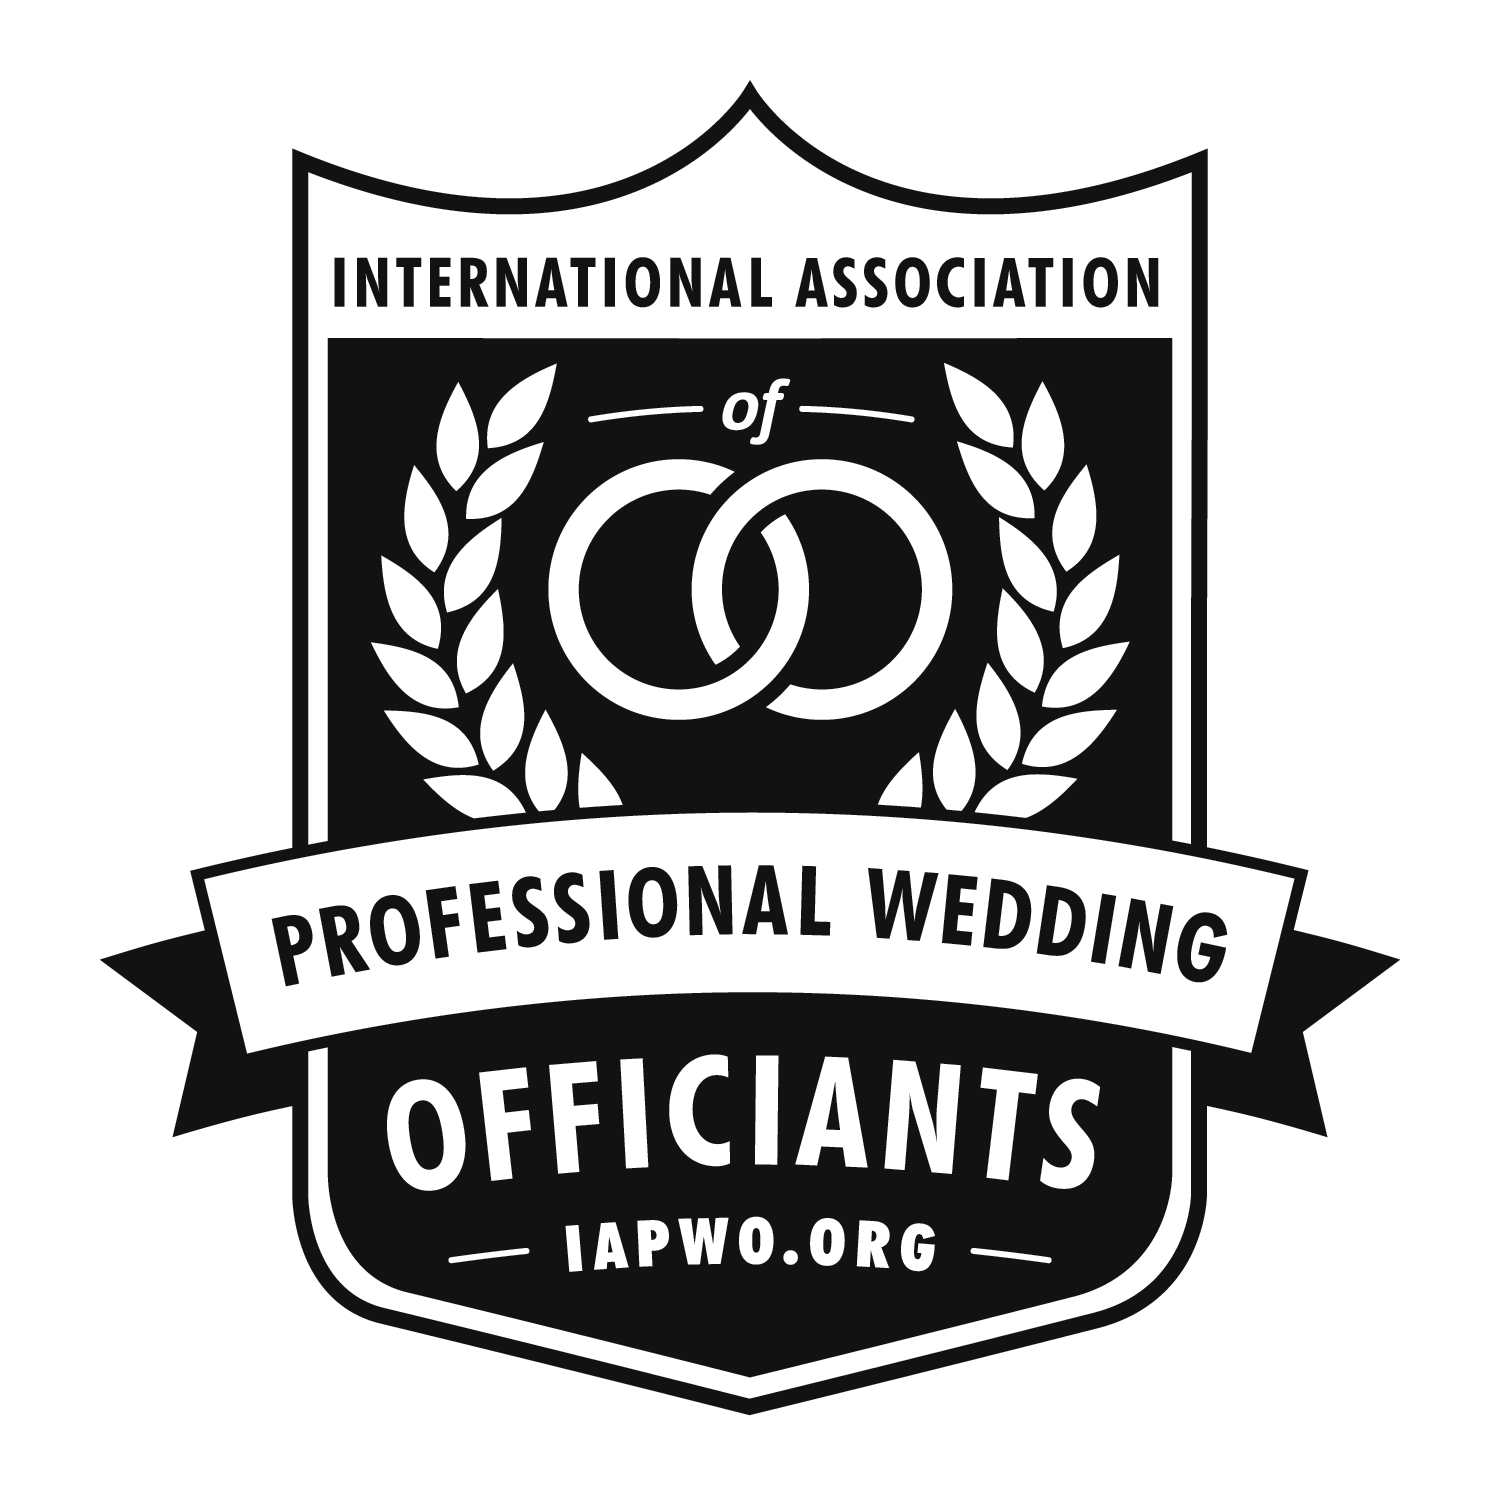 IAPWO - The International Association of Professional Wedding Officiants